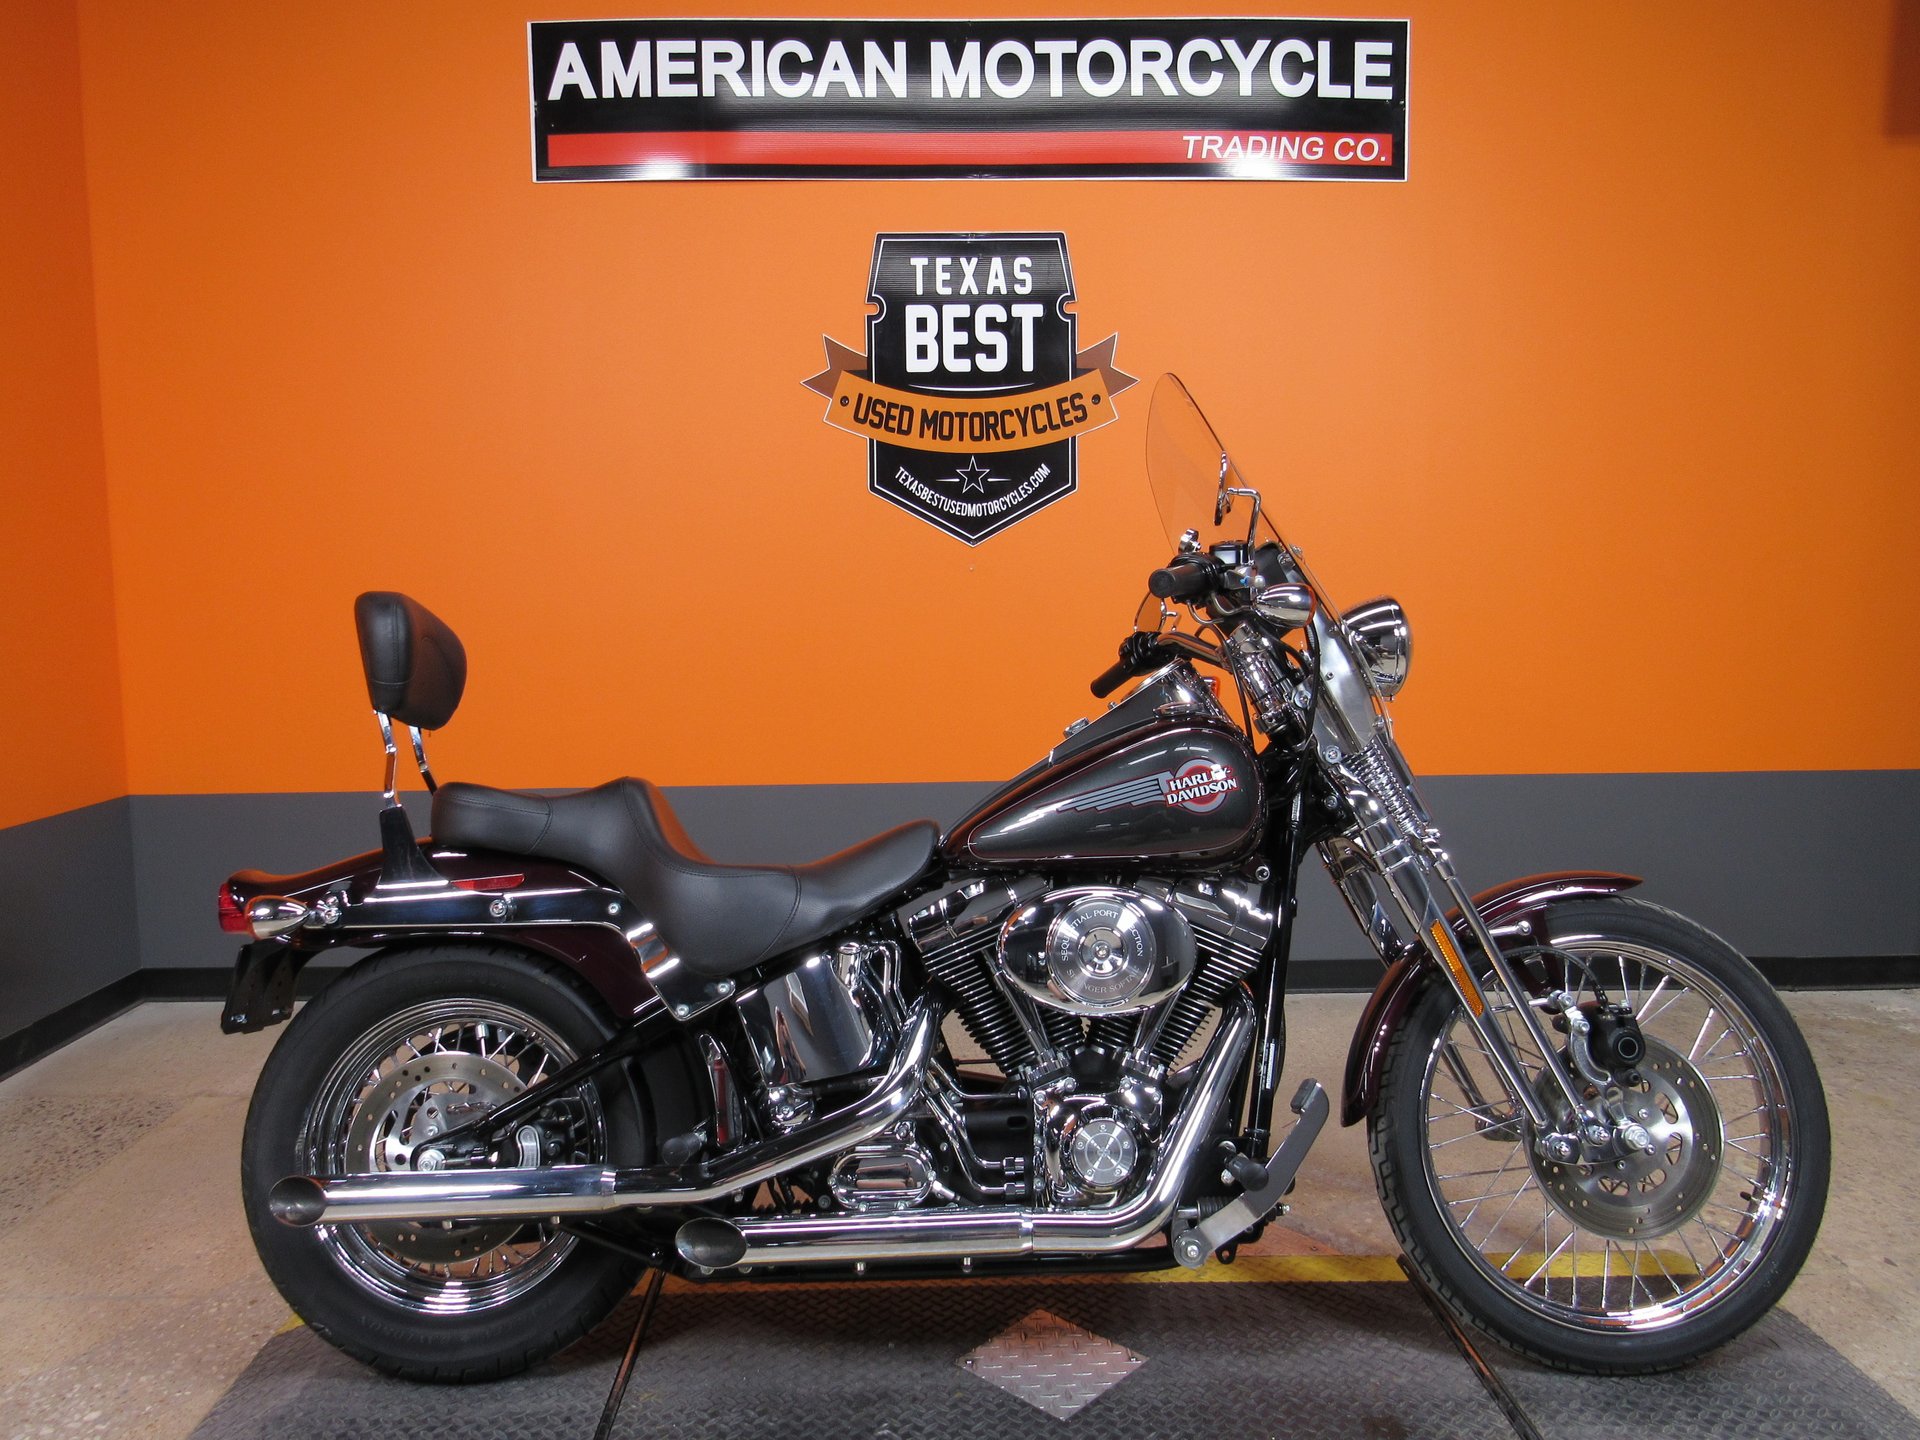 2005 Harley-Davidson Softail Springer | American Motorcycle Trading